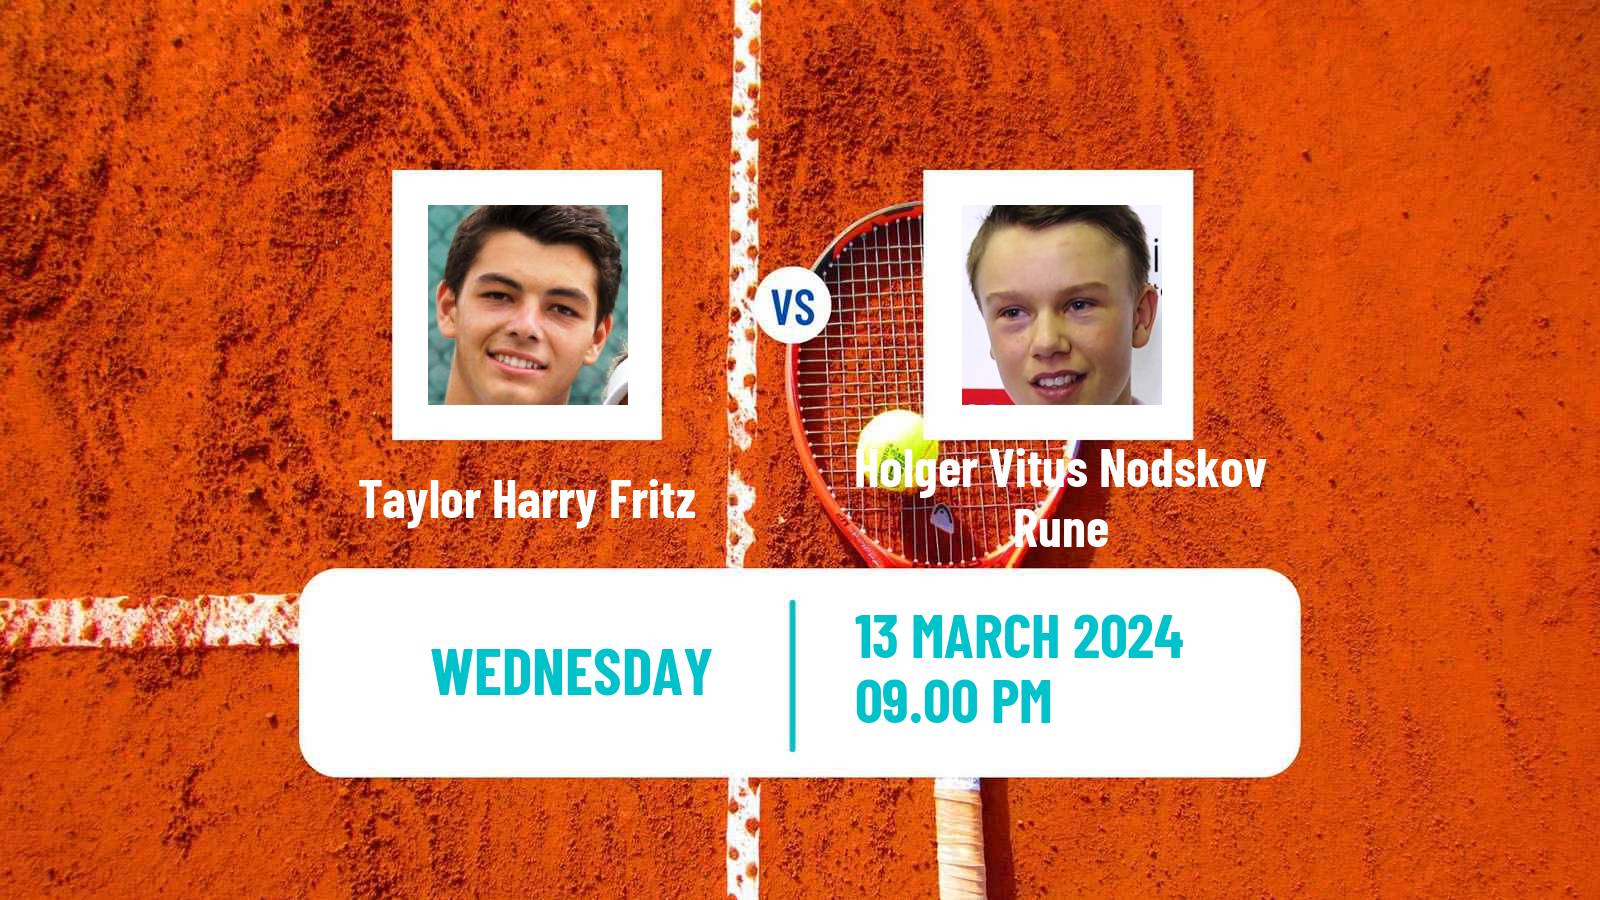 Tennis ATP Indian Wells Taylor Harry Fritz - Holger Vitus Nodskov Rune